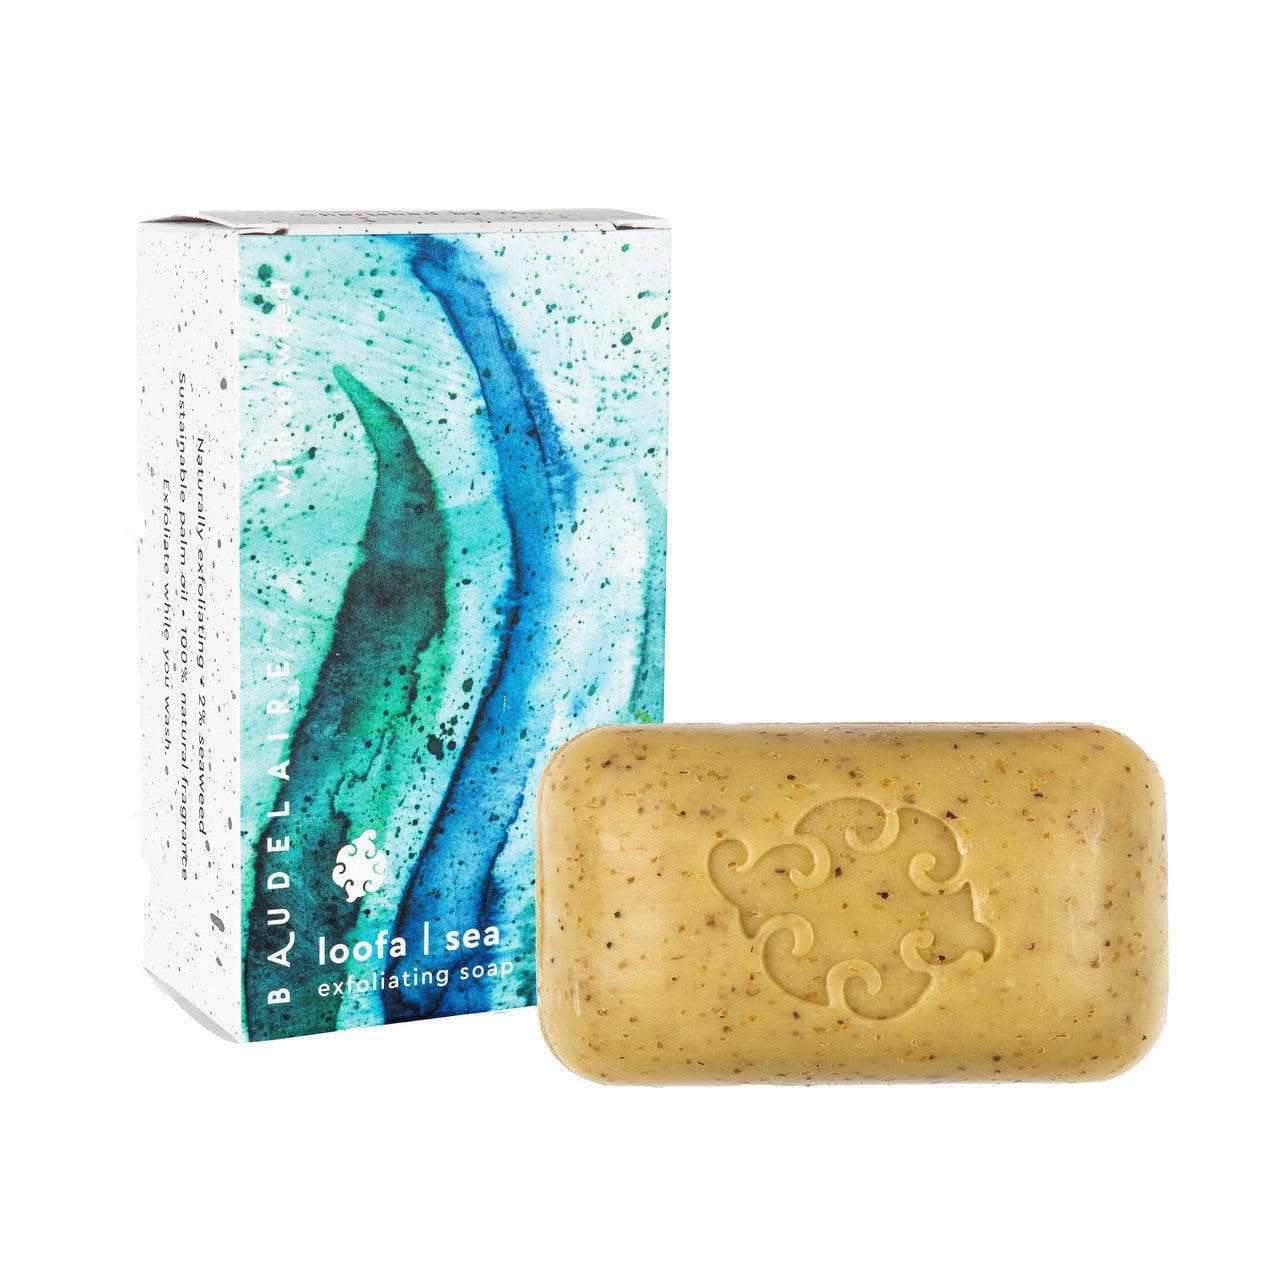 Sea Loofah Soap - Travel Size - Giften Market